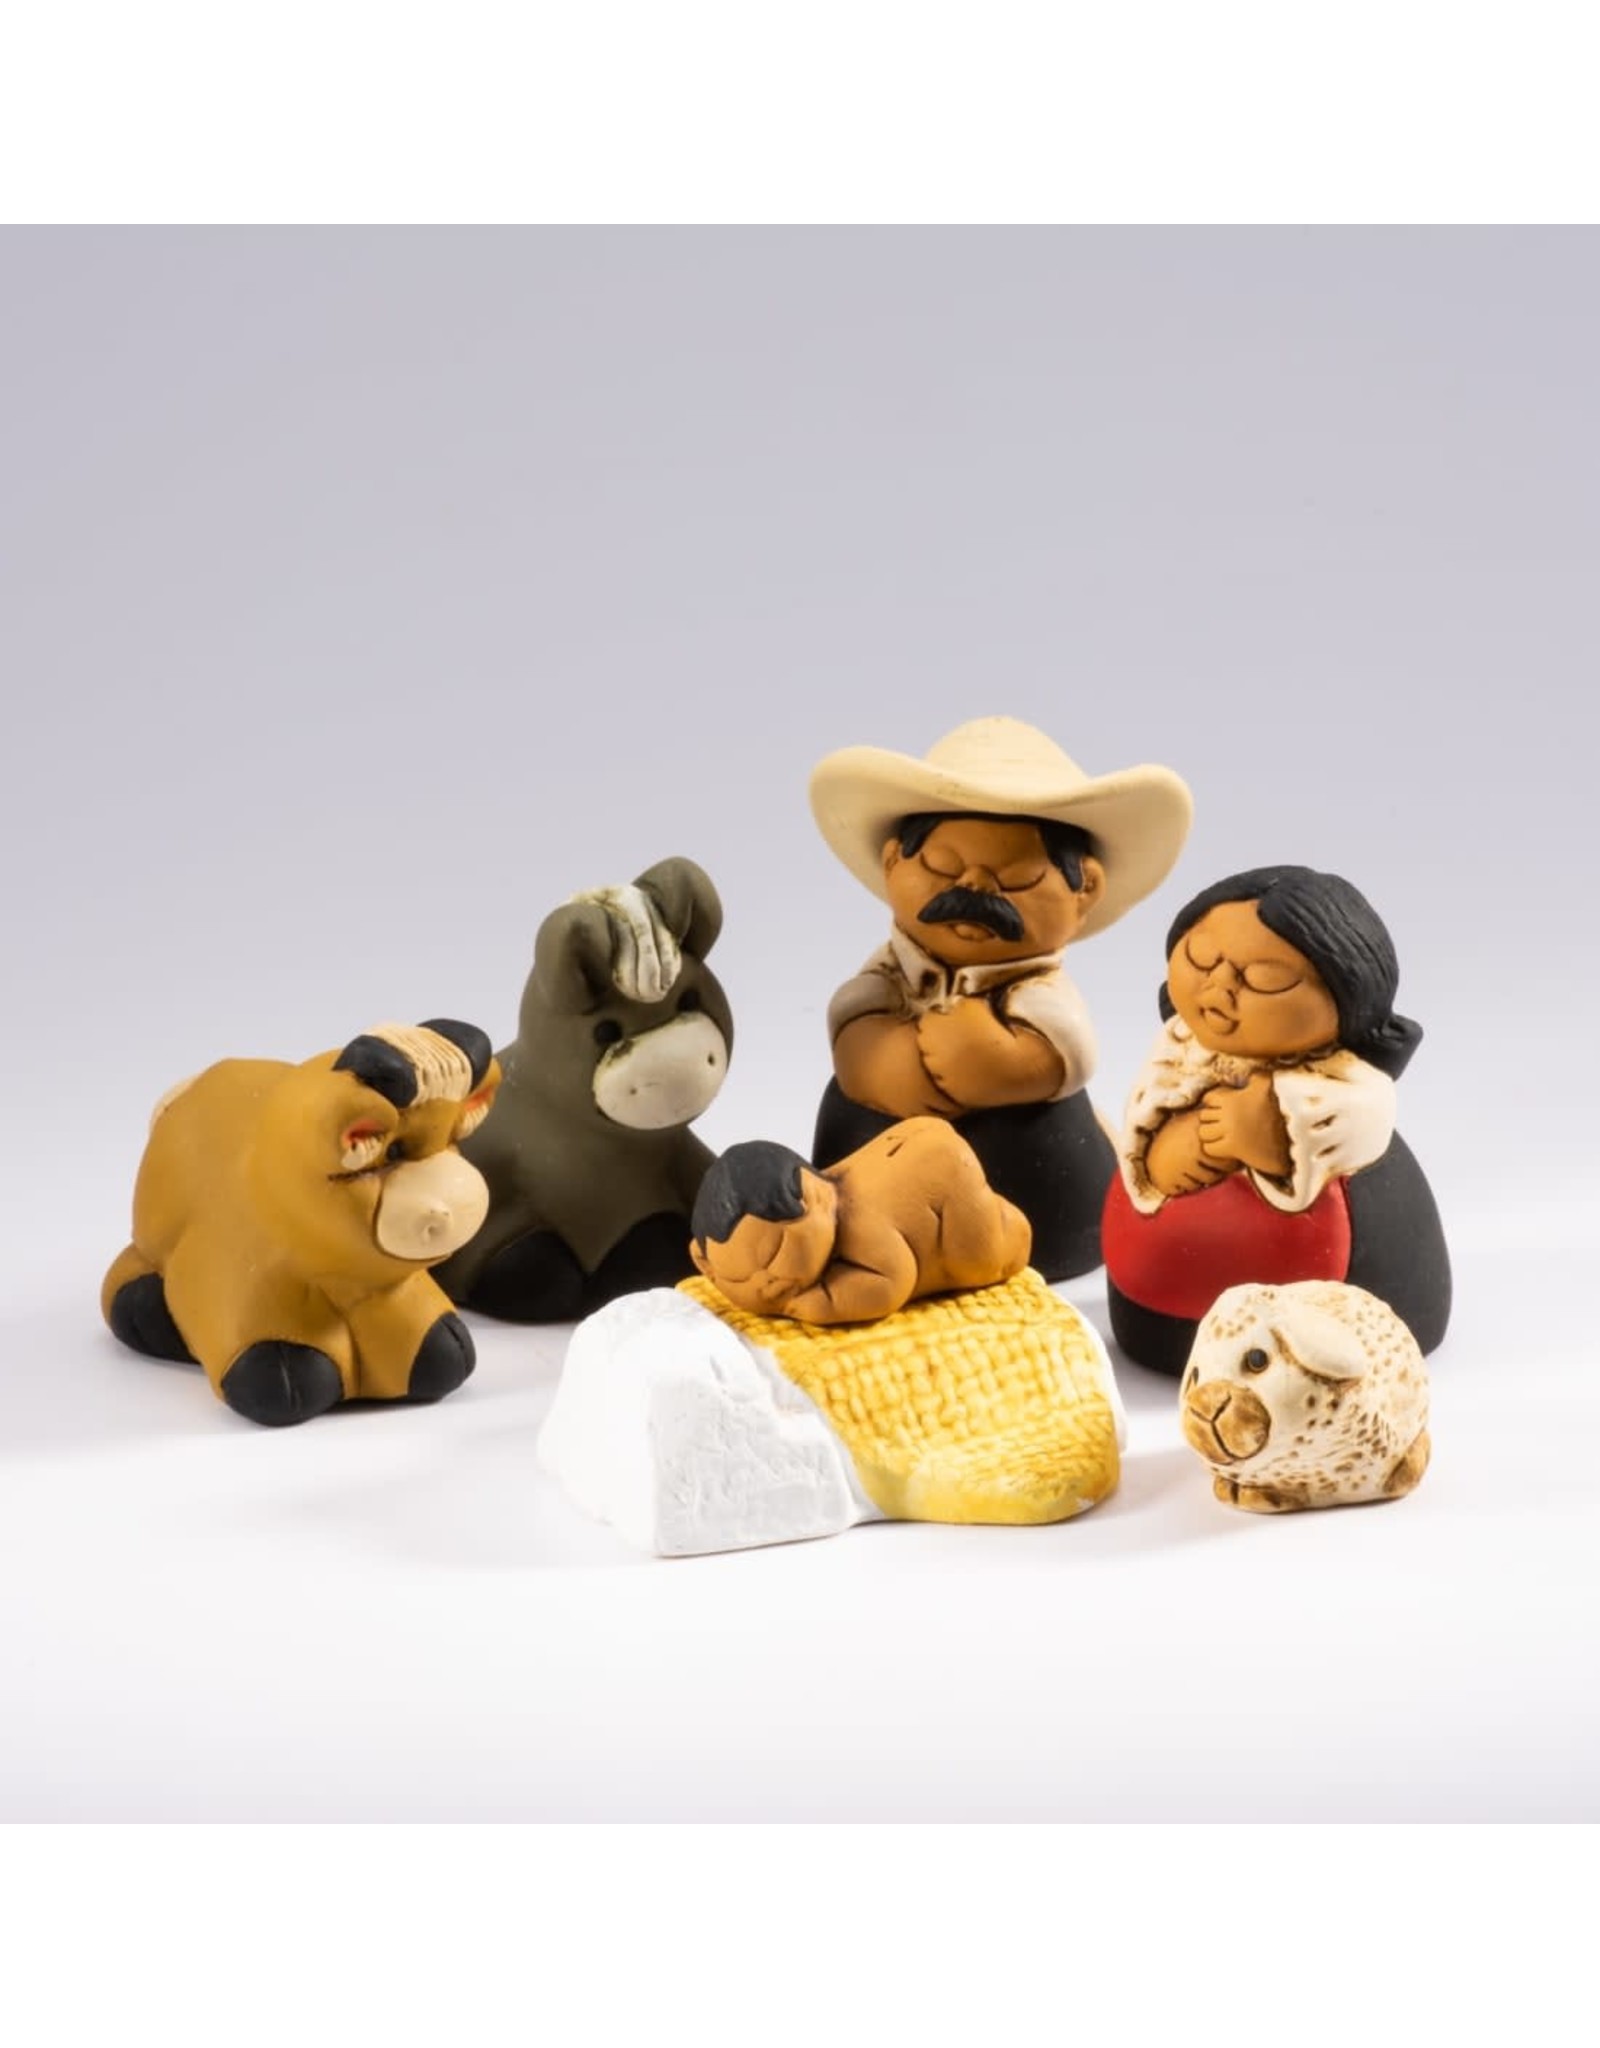 Lucuma Characato Small Ceramic Nativity, 9 pcs, Peru